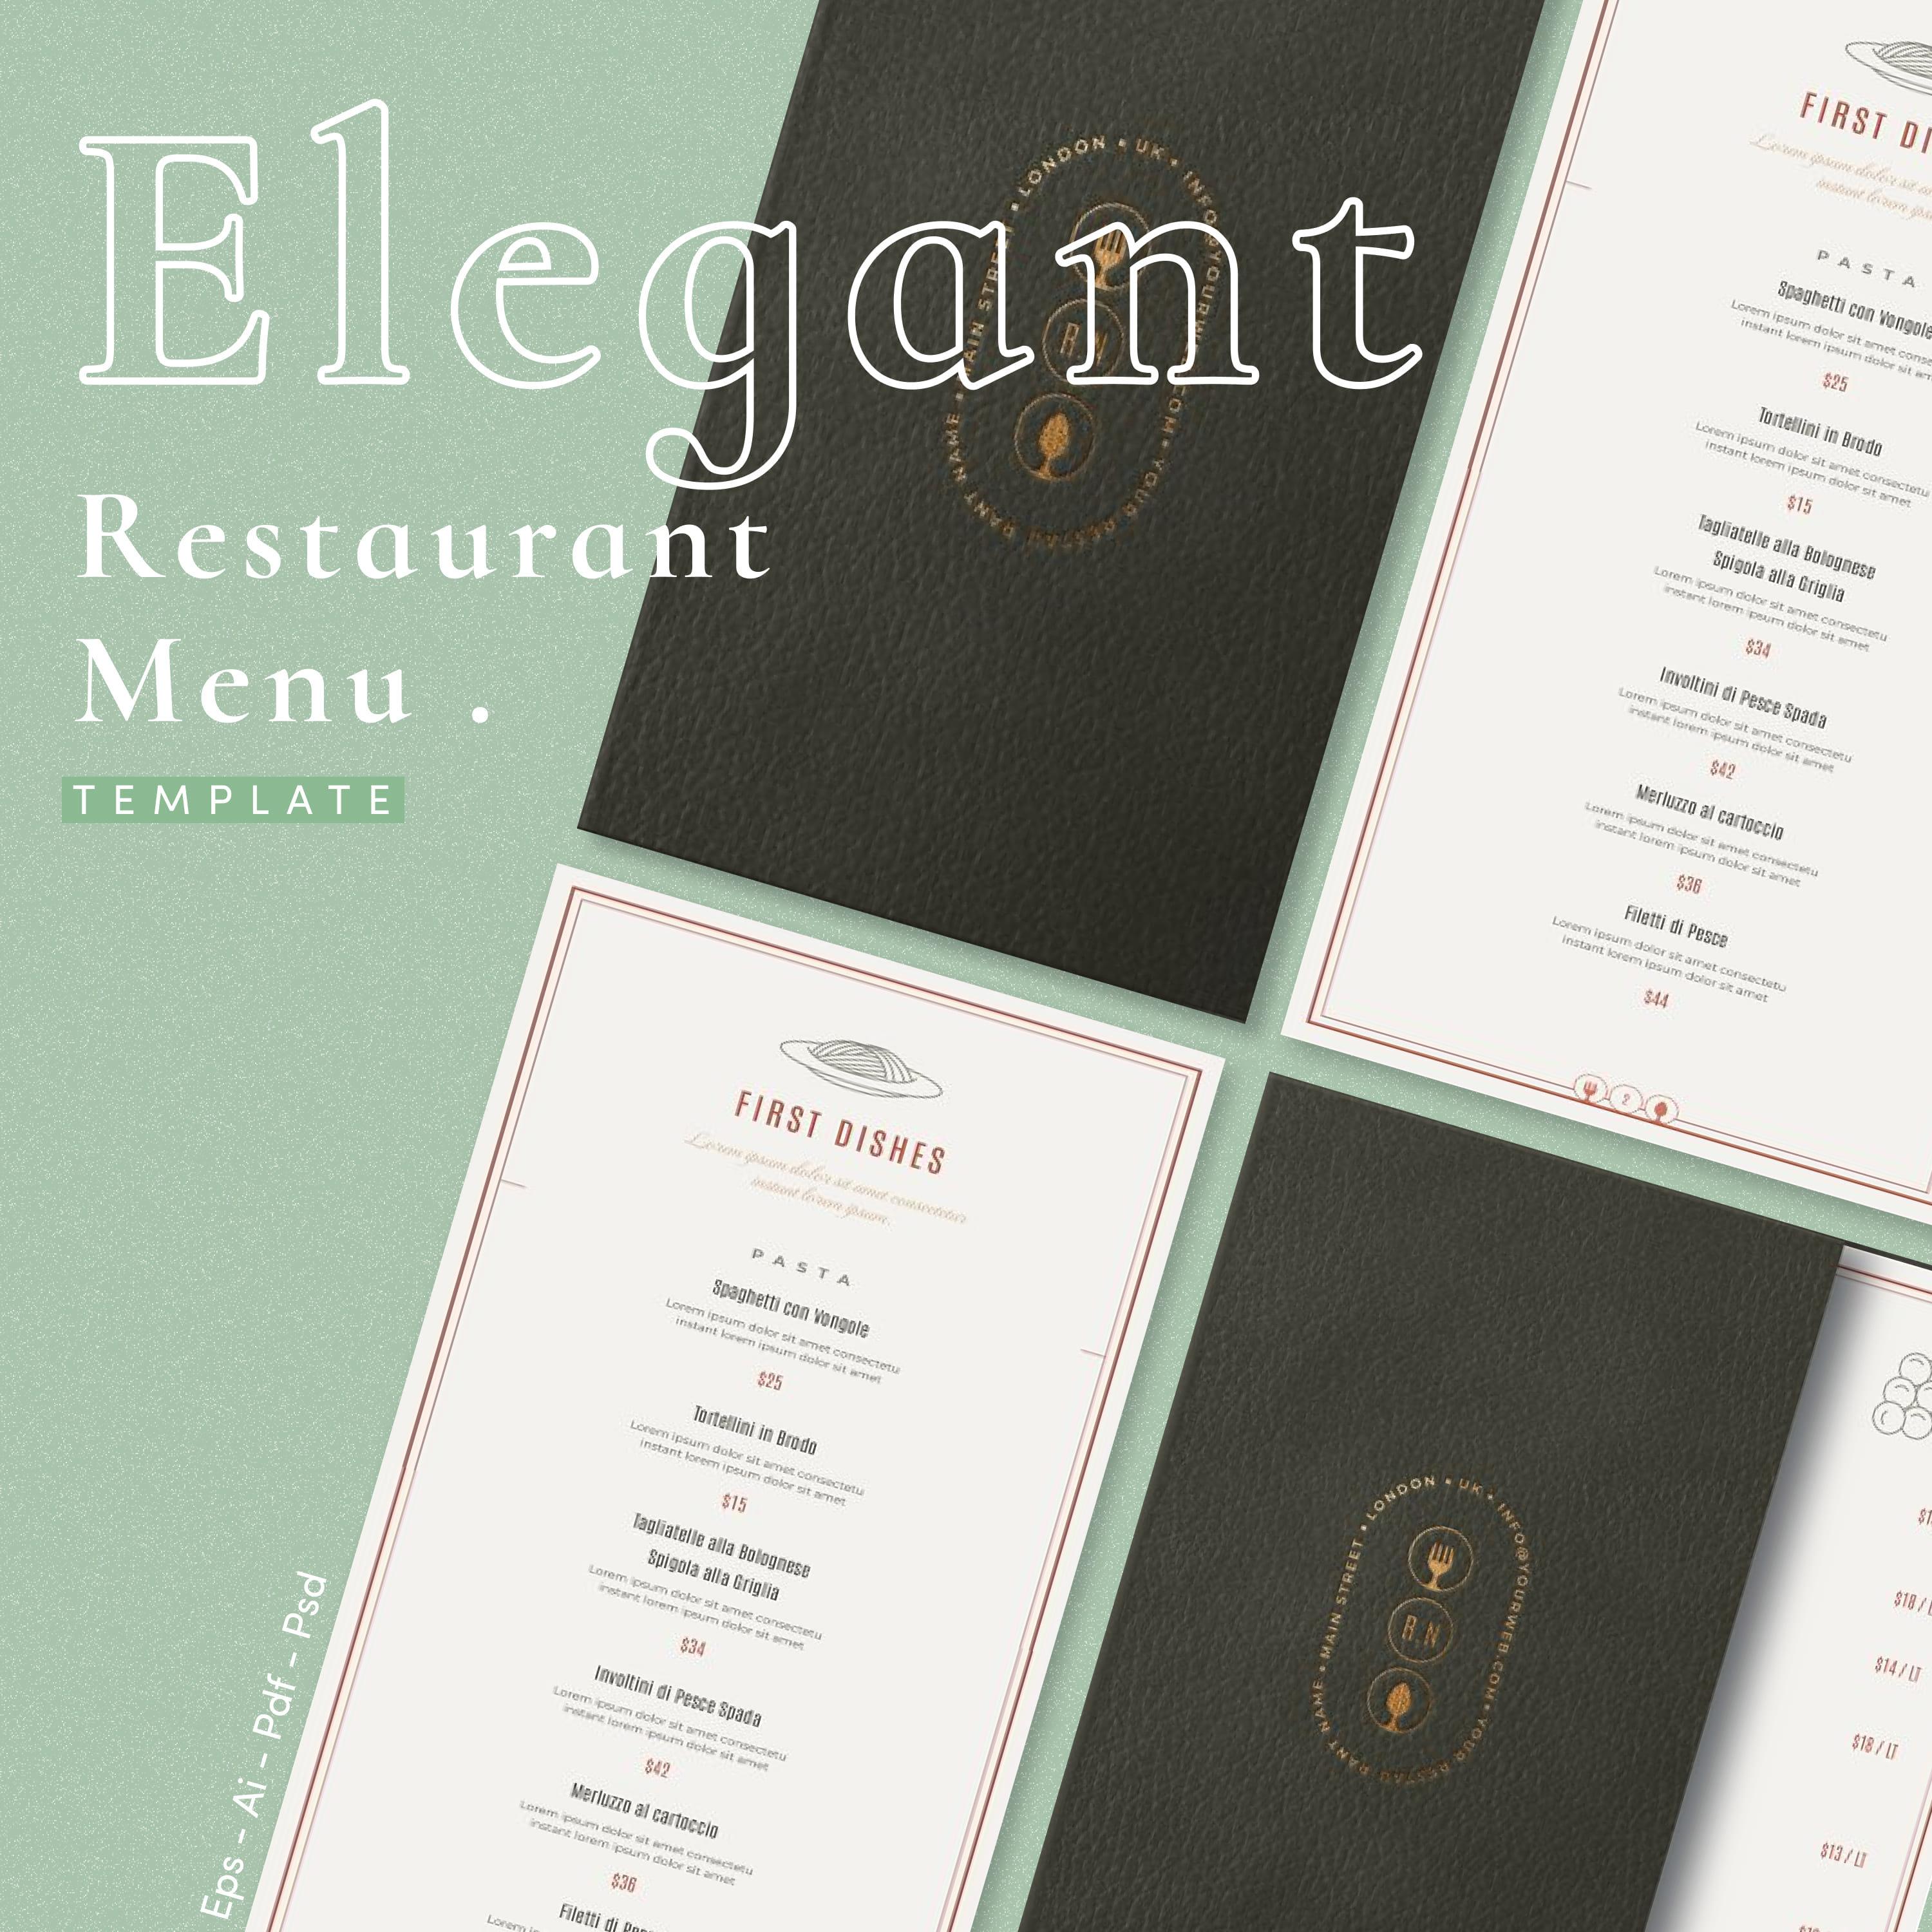 Elegant Restaurant Menu Template Cover Image.